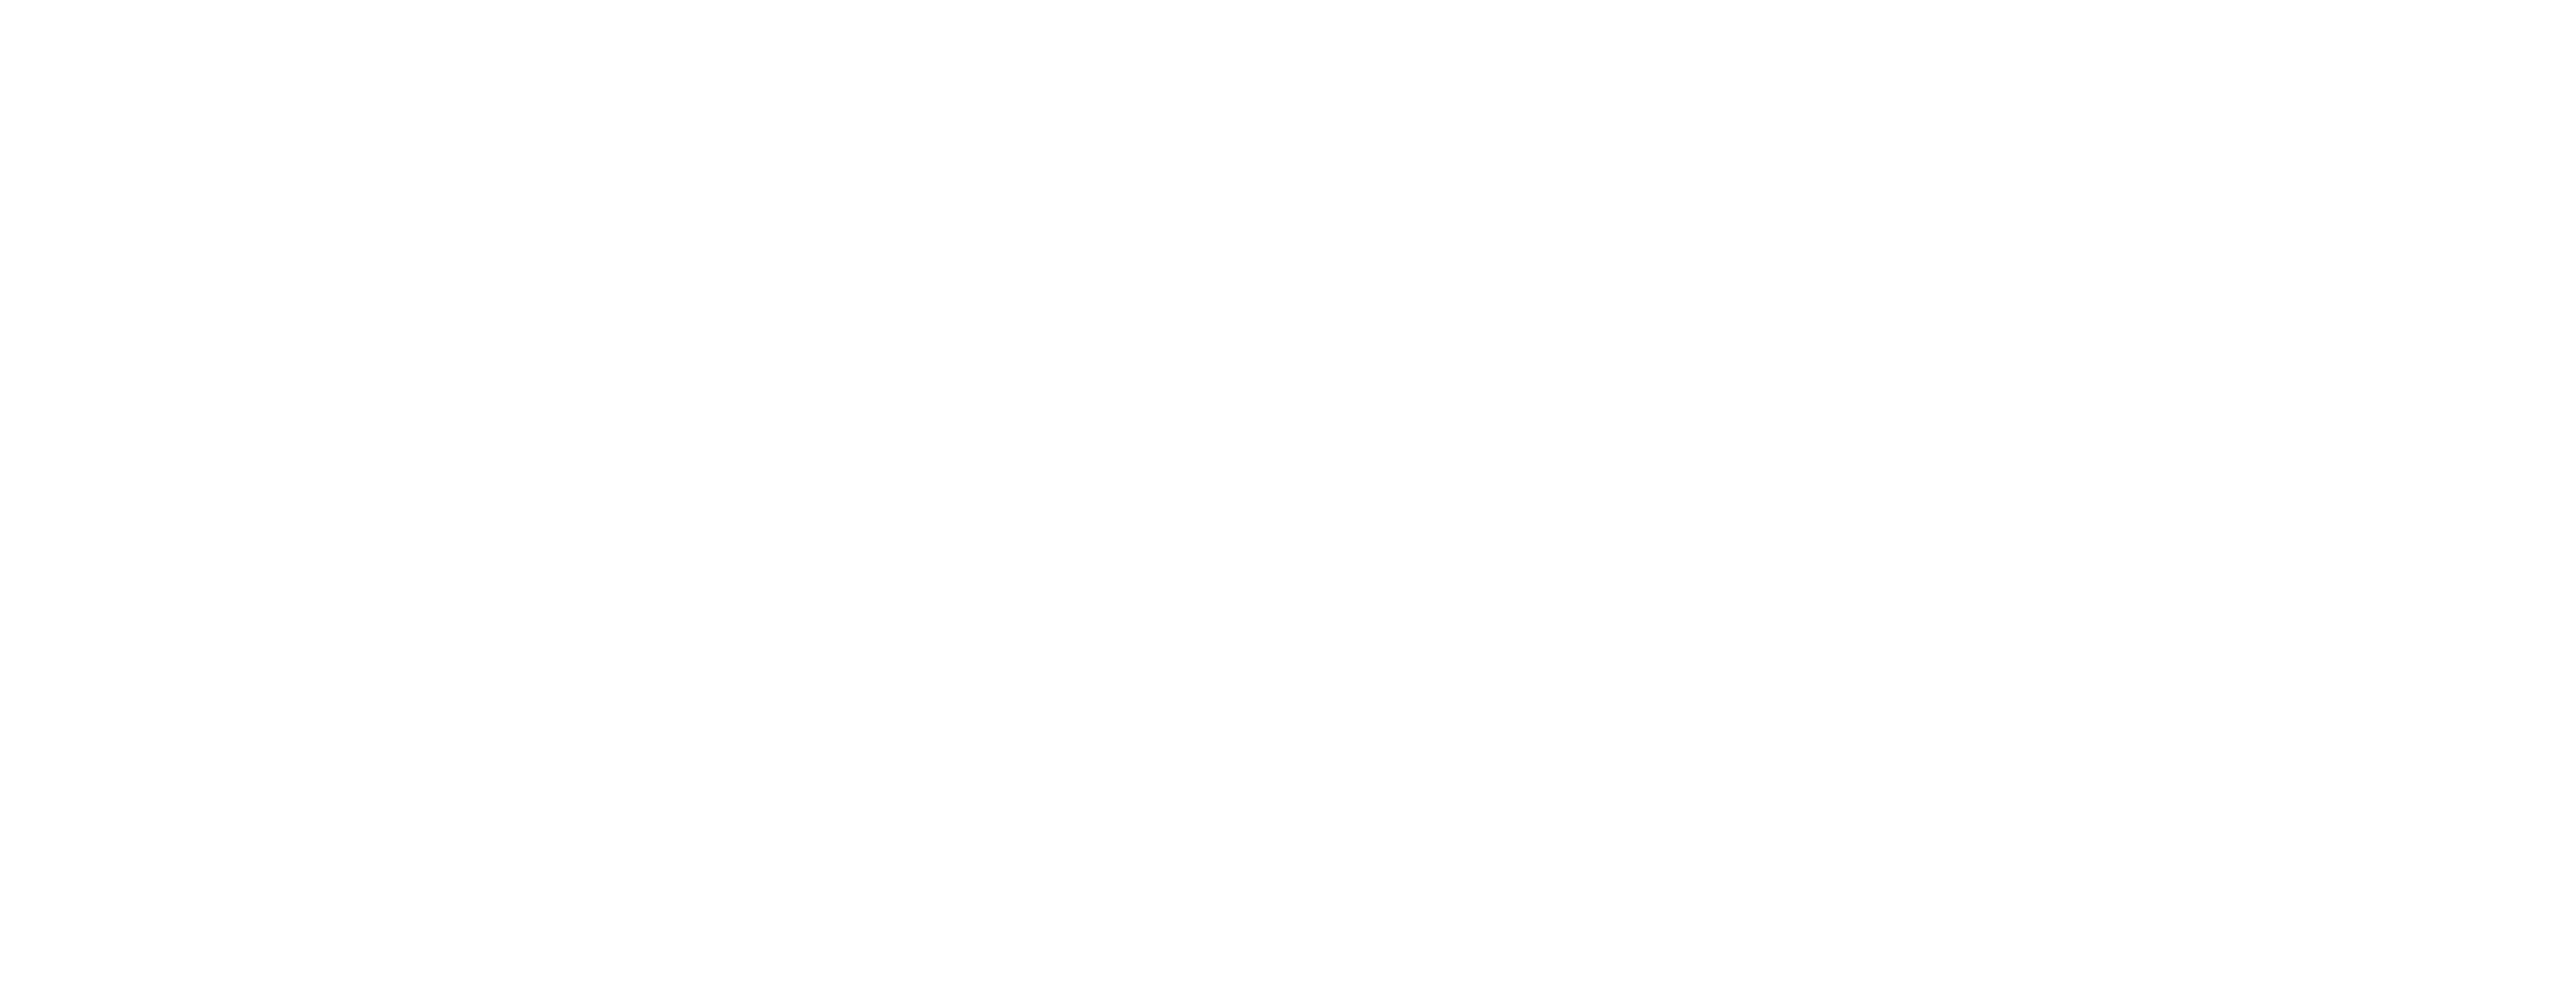 Georgia Soares